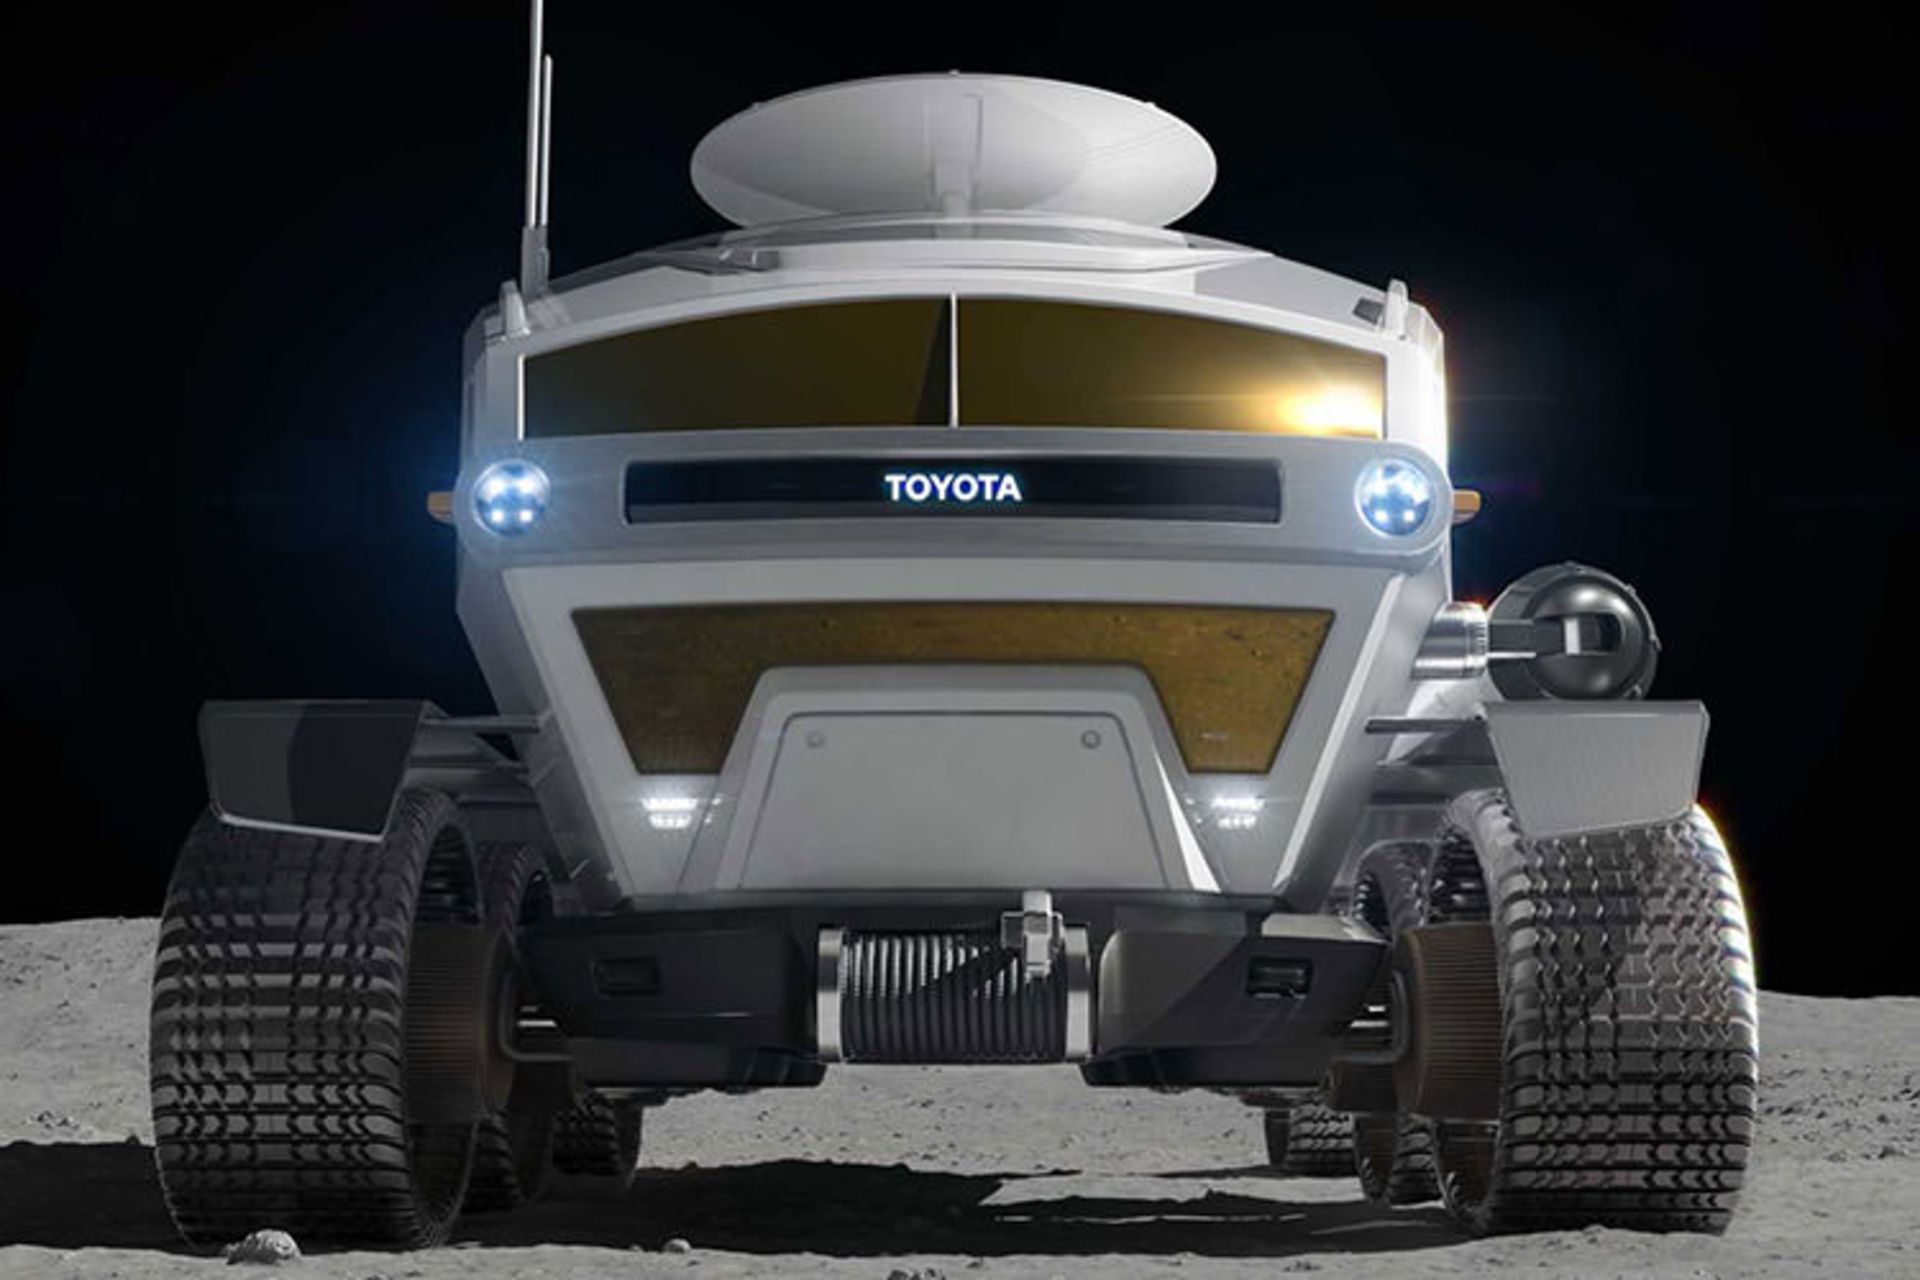 JAXA Toyota Rover / خودرو ماه نورد تویوتا آژانس فضایی ژاپن